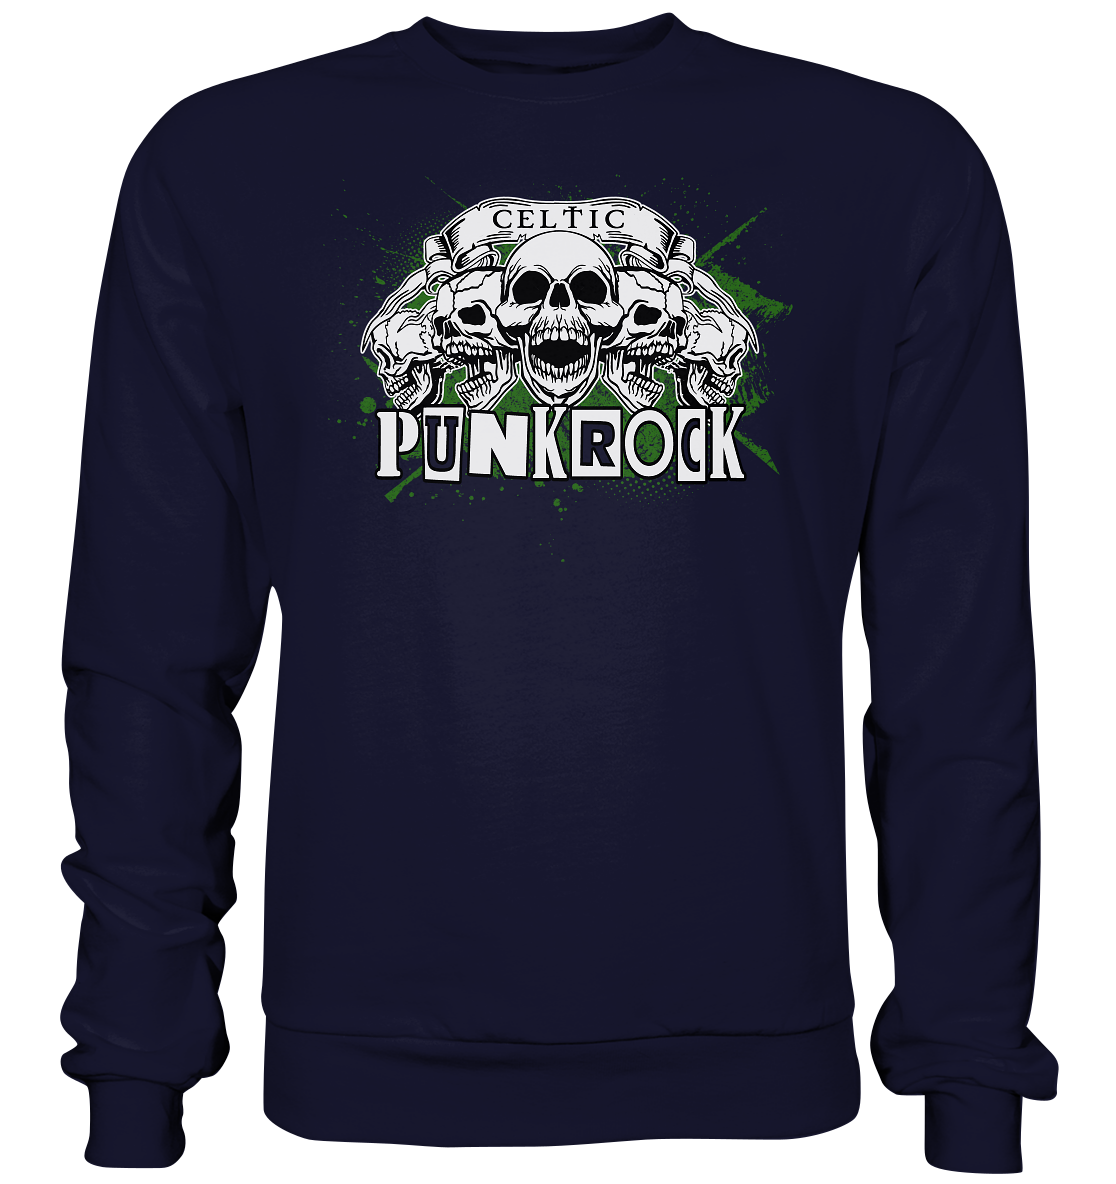 Celtic "Punkrock" - Basic Sweatshirt